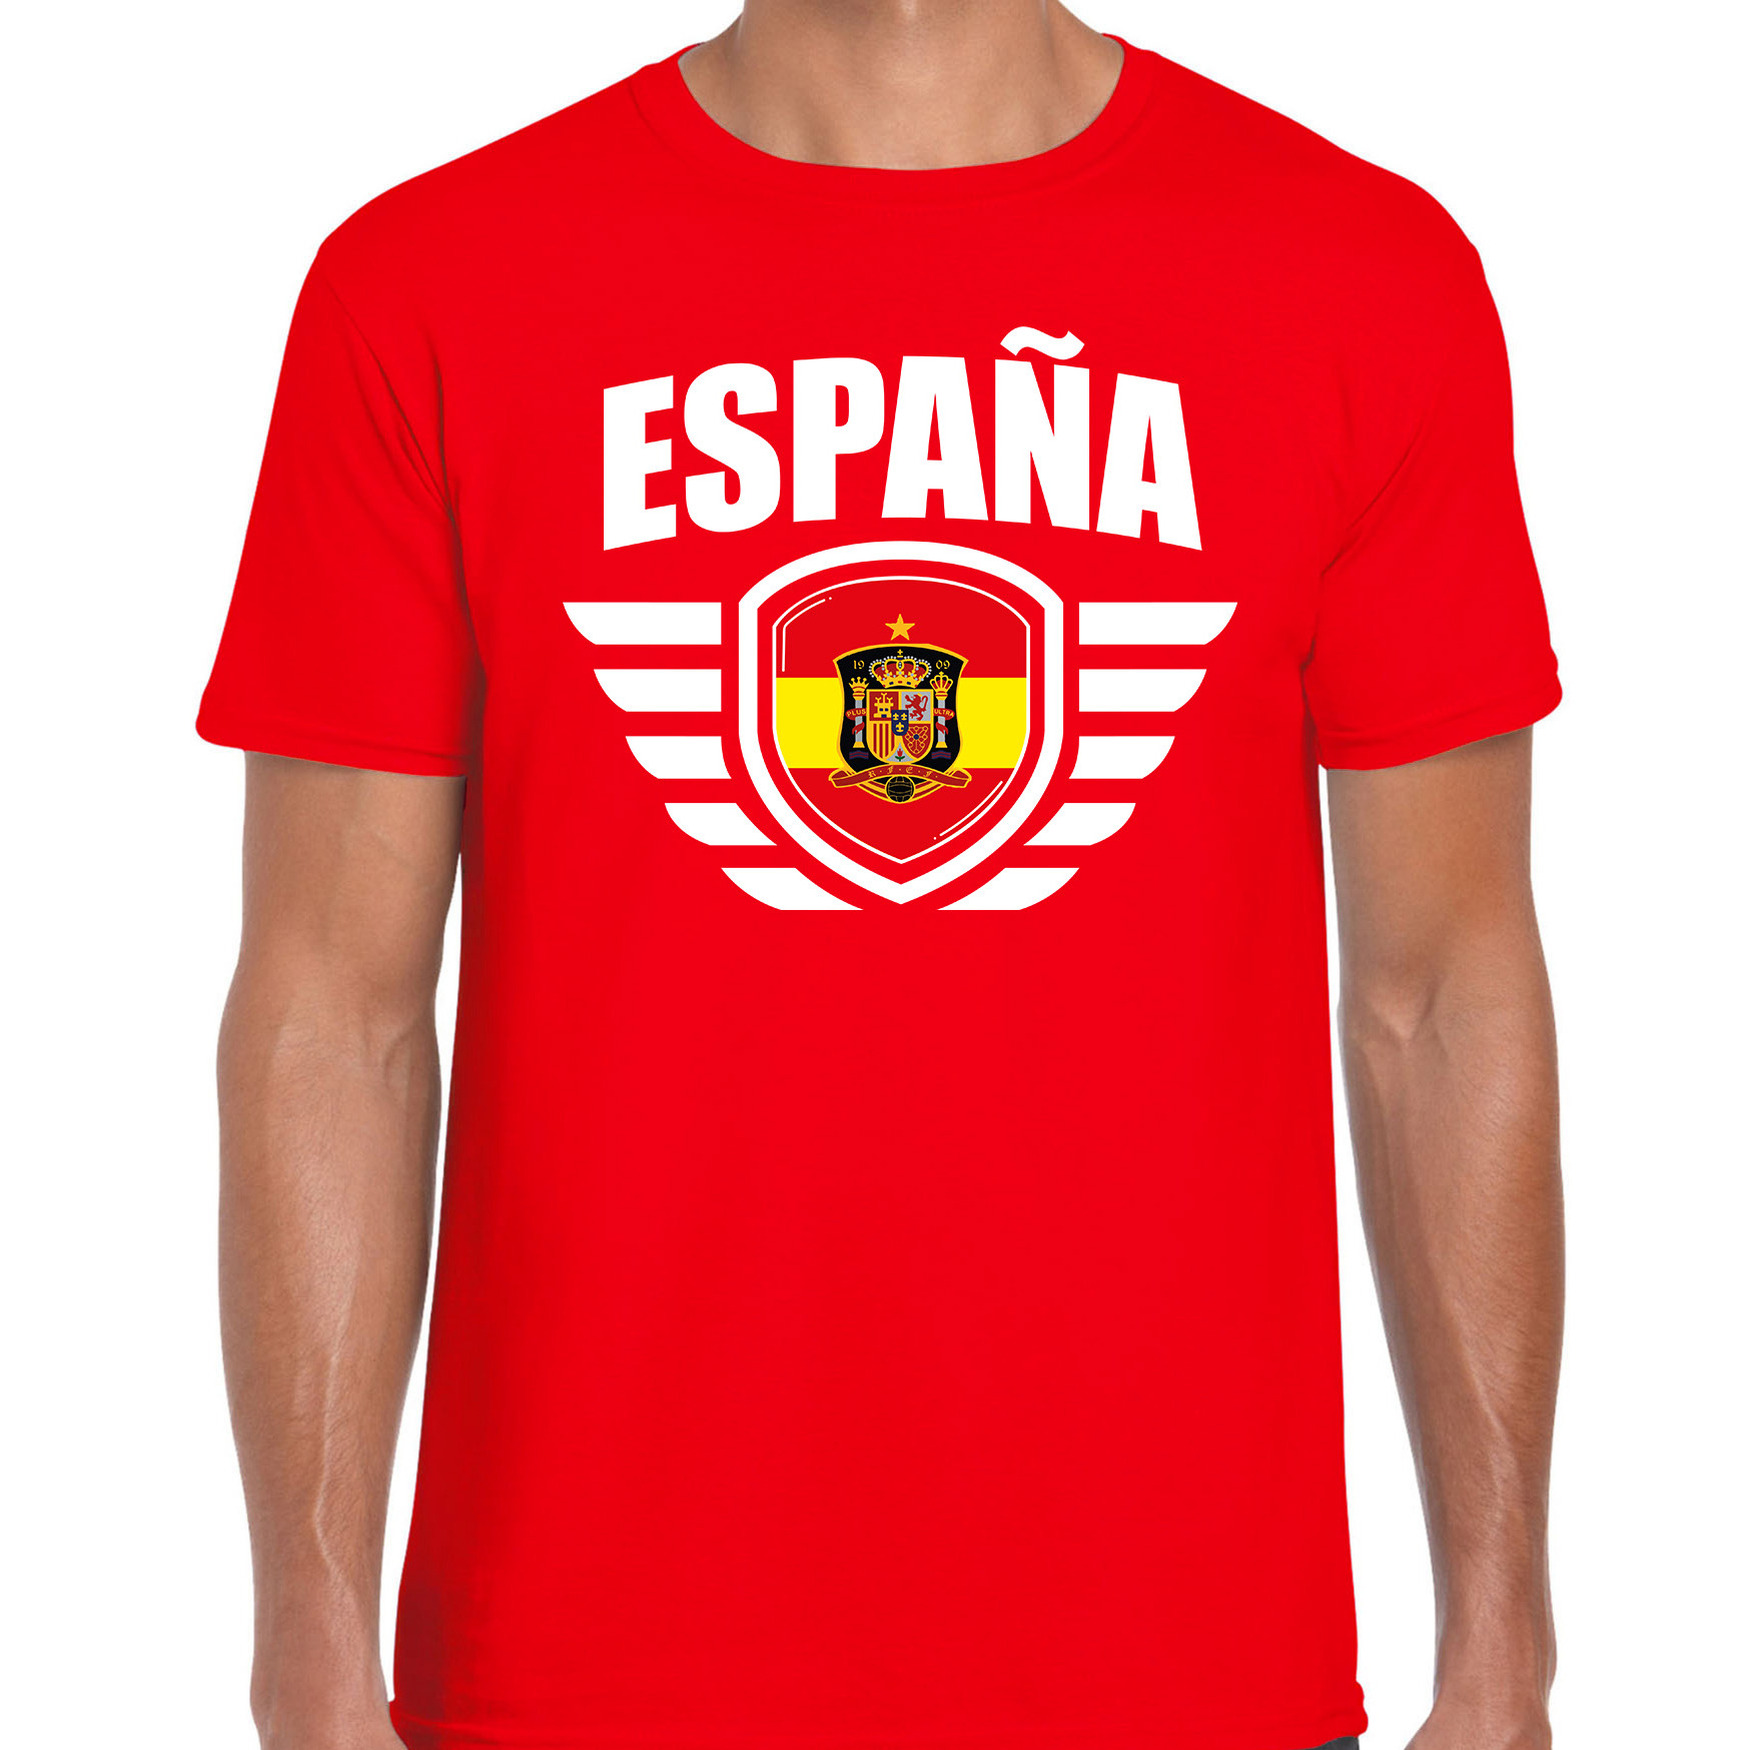 Espana landen-voetbal t-shirt rood heren EK-WK voetbal